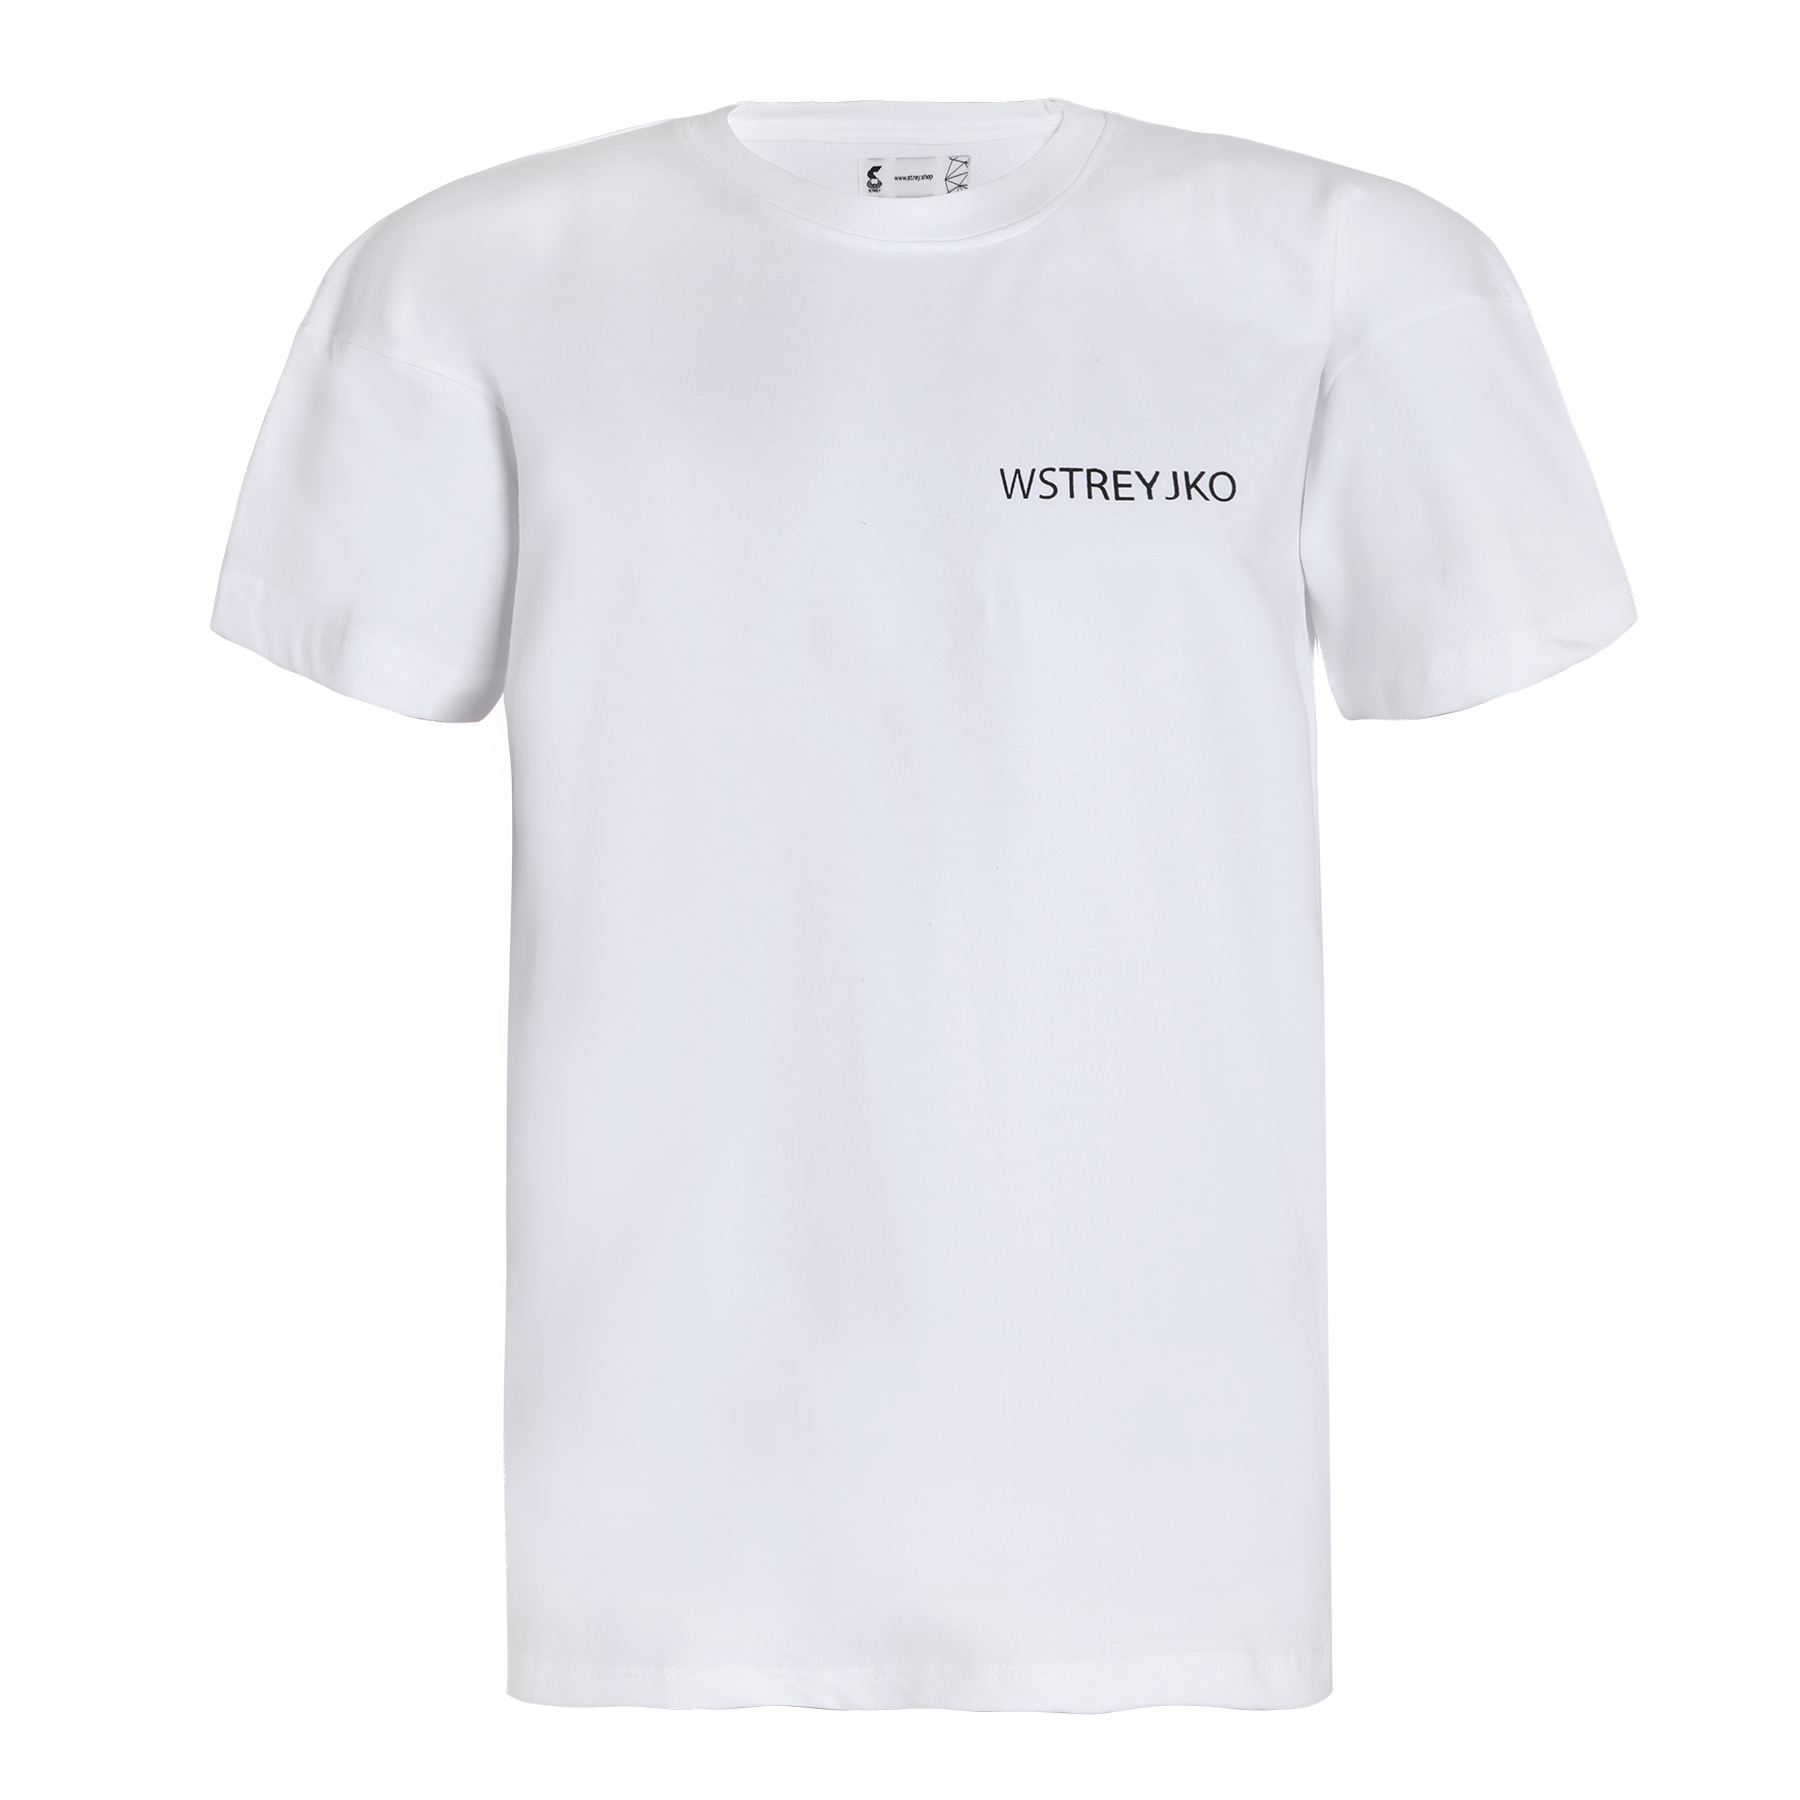 Ivory XYZ plain T shirt